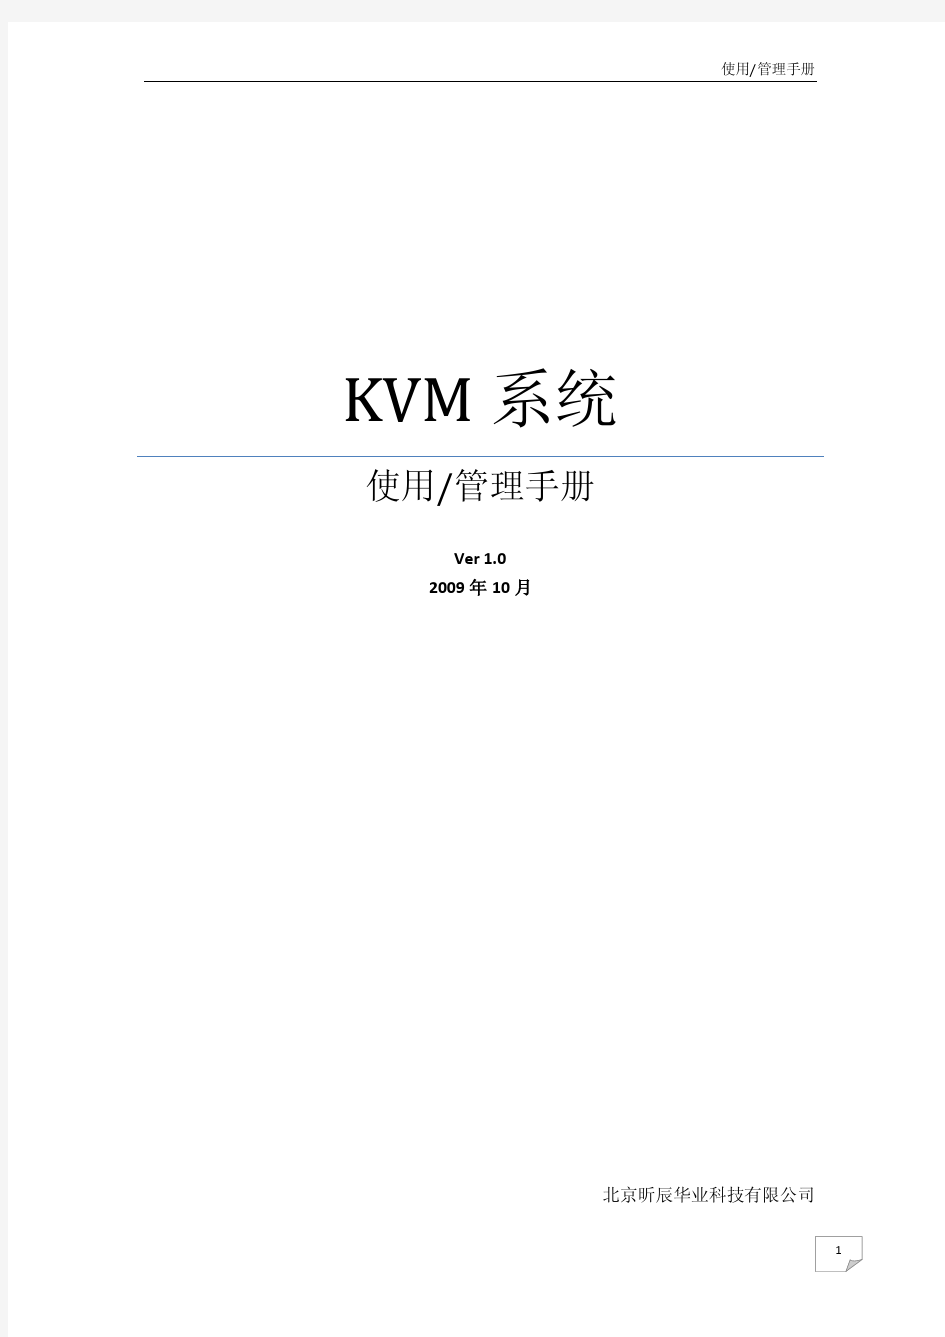 Avocent KVM系统使用管理手册